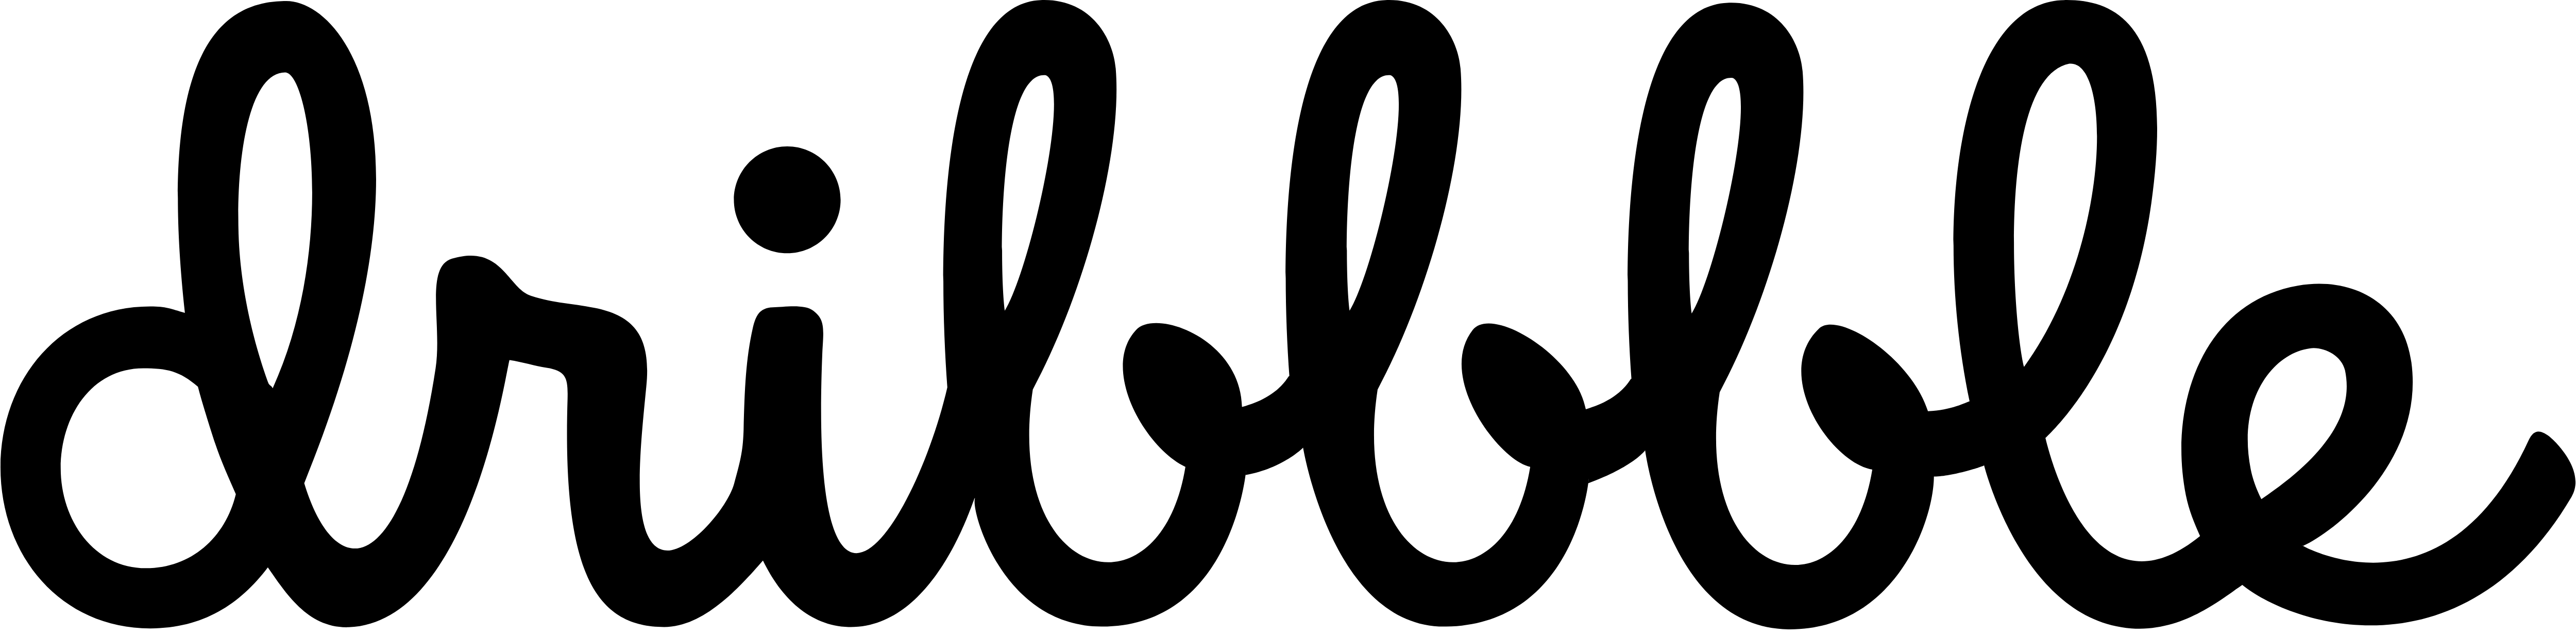 Dribbble Logo Icon Png Image 